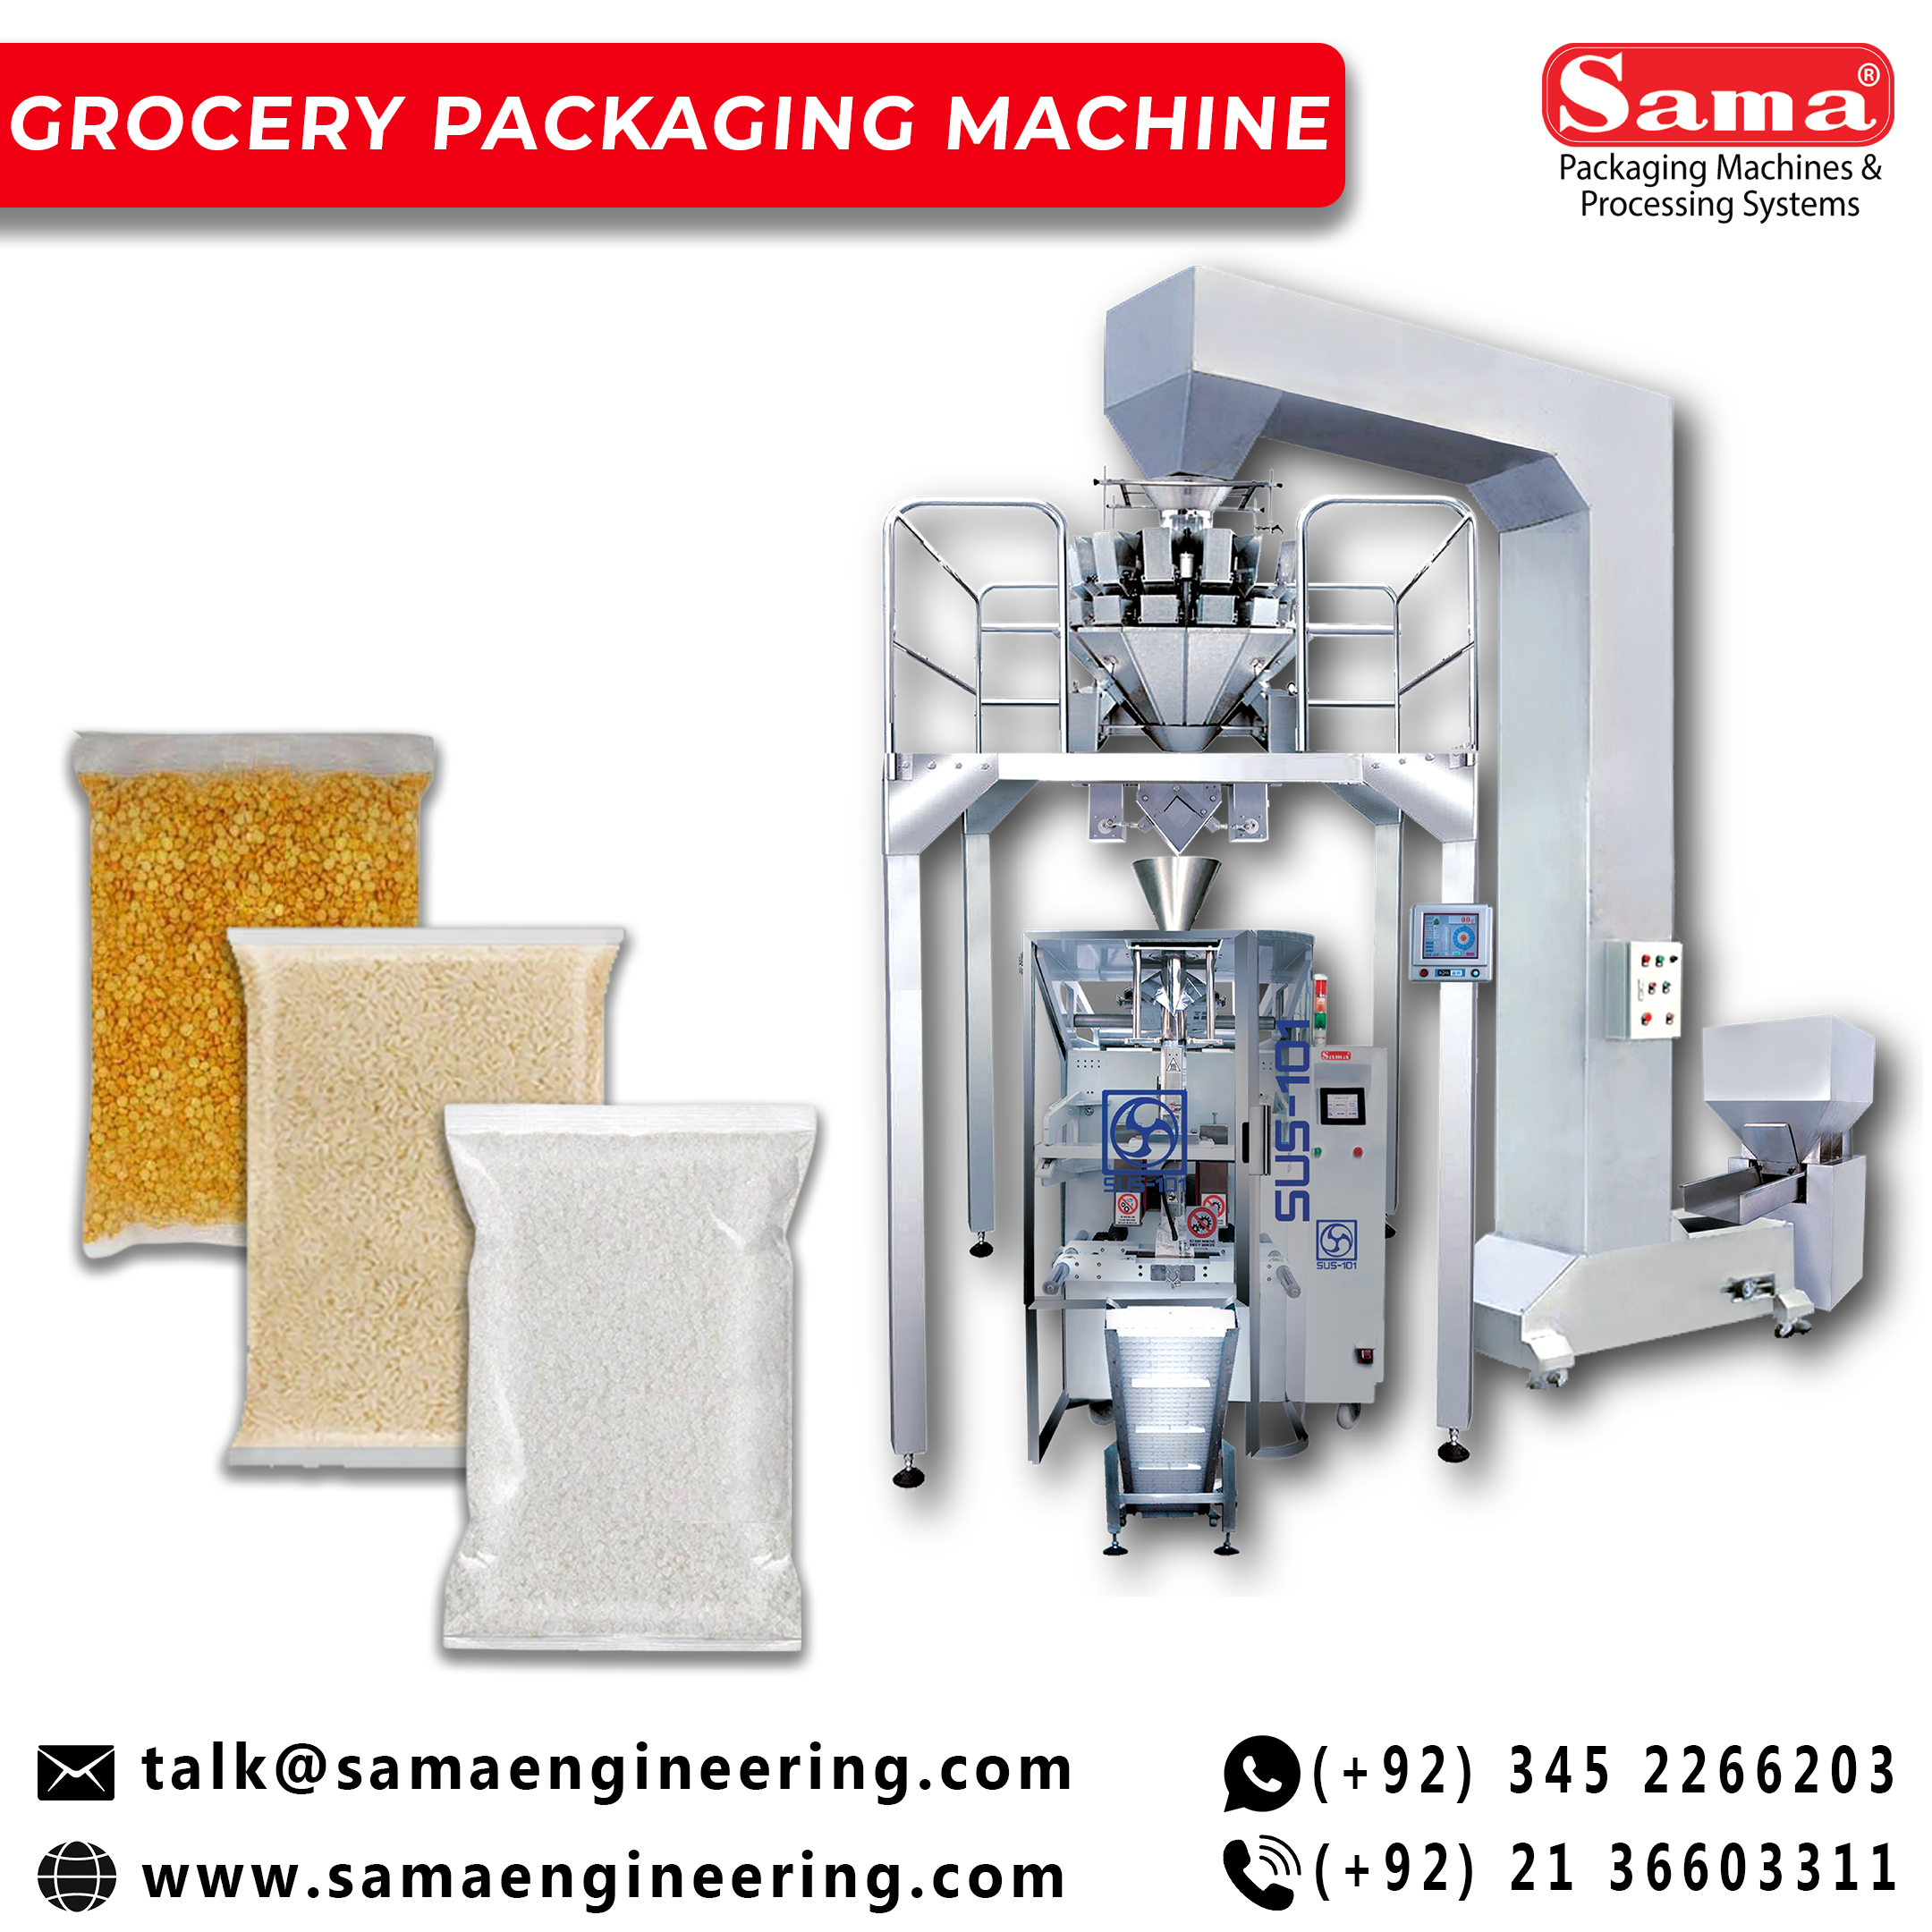 grocery-packaging-machine-112788